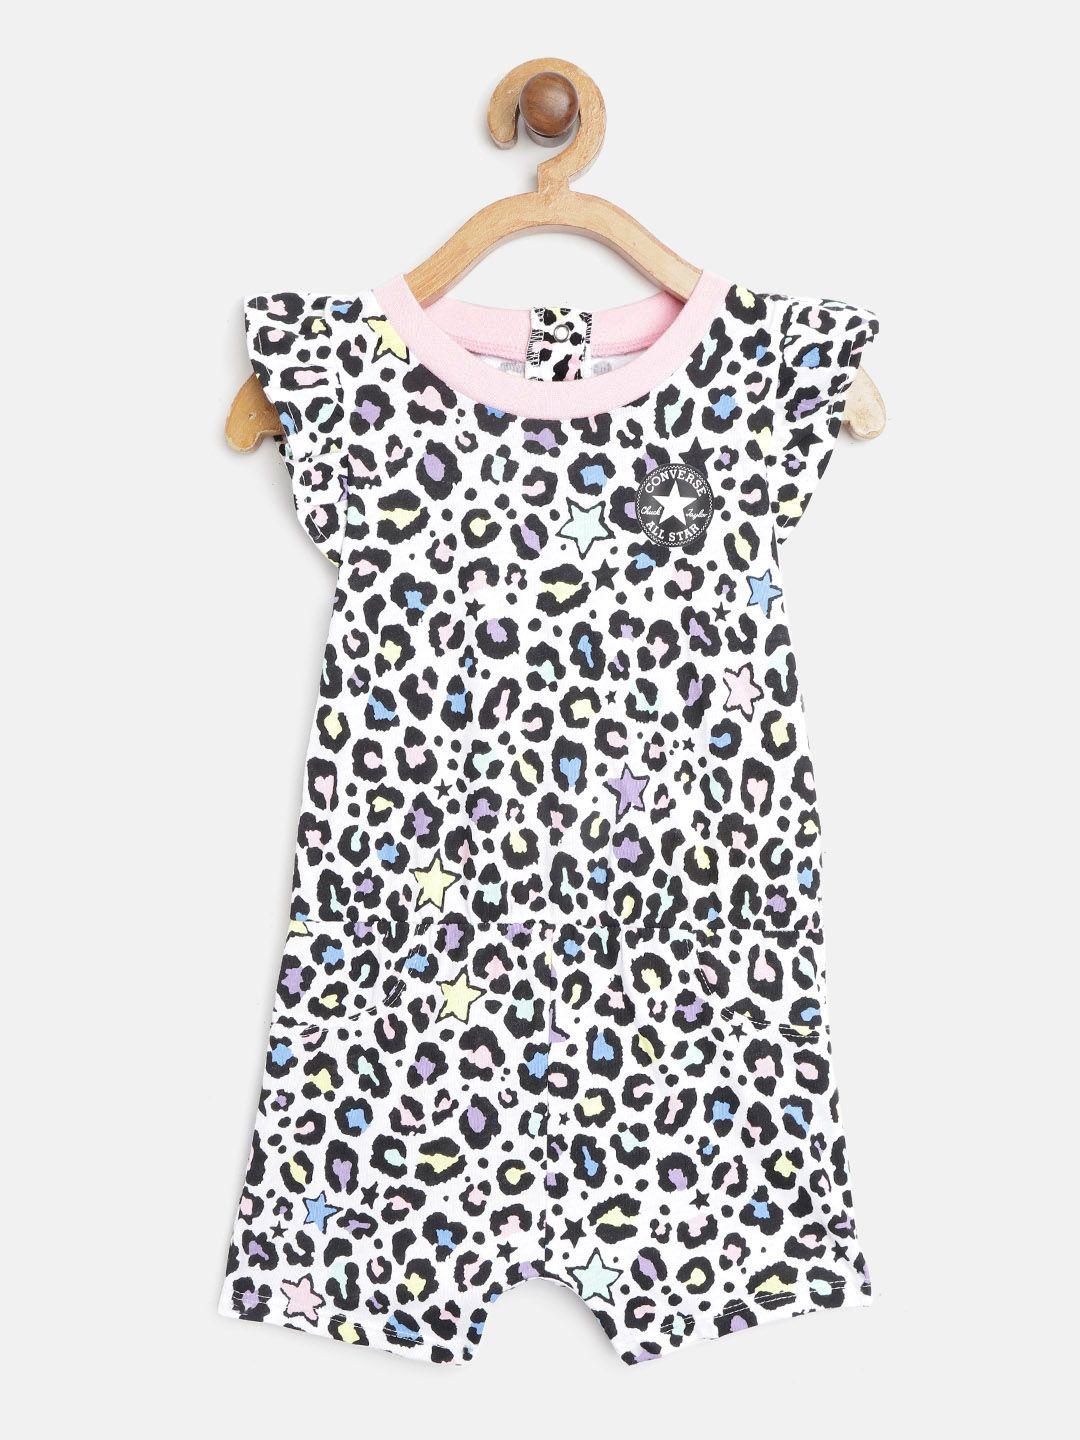 converse infant girls white & black pure cotton leopard print rompers